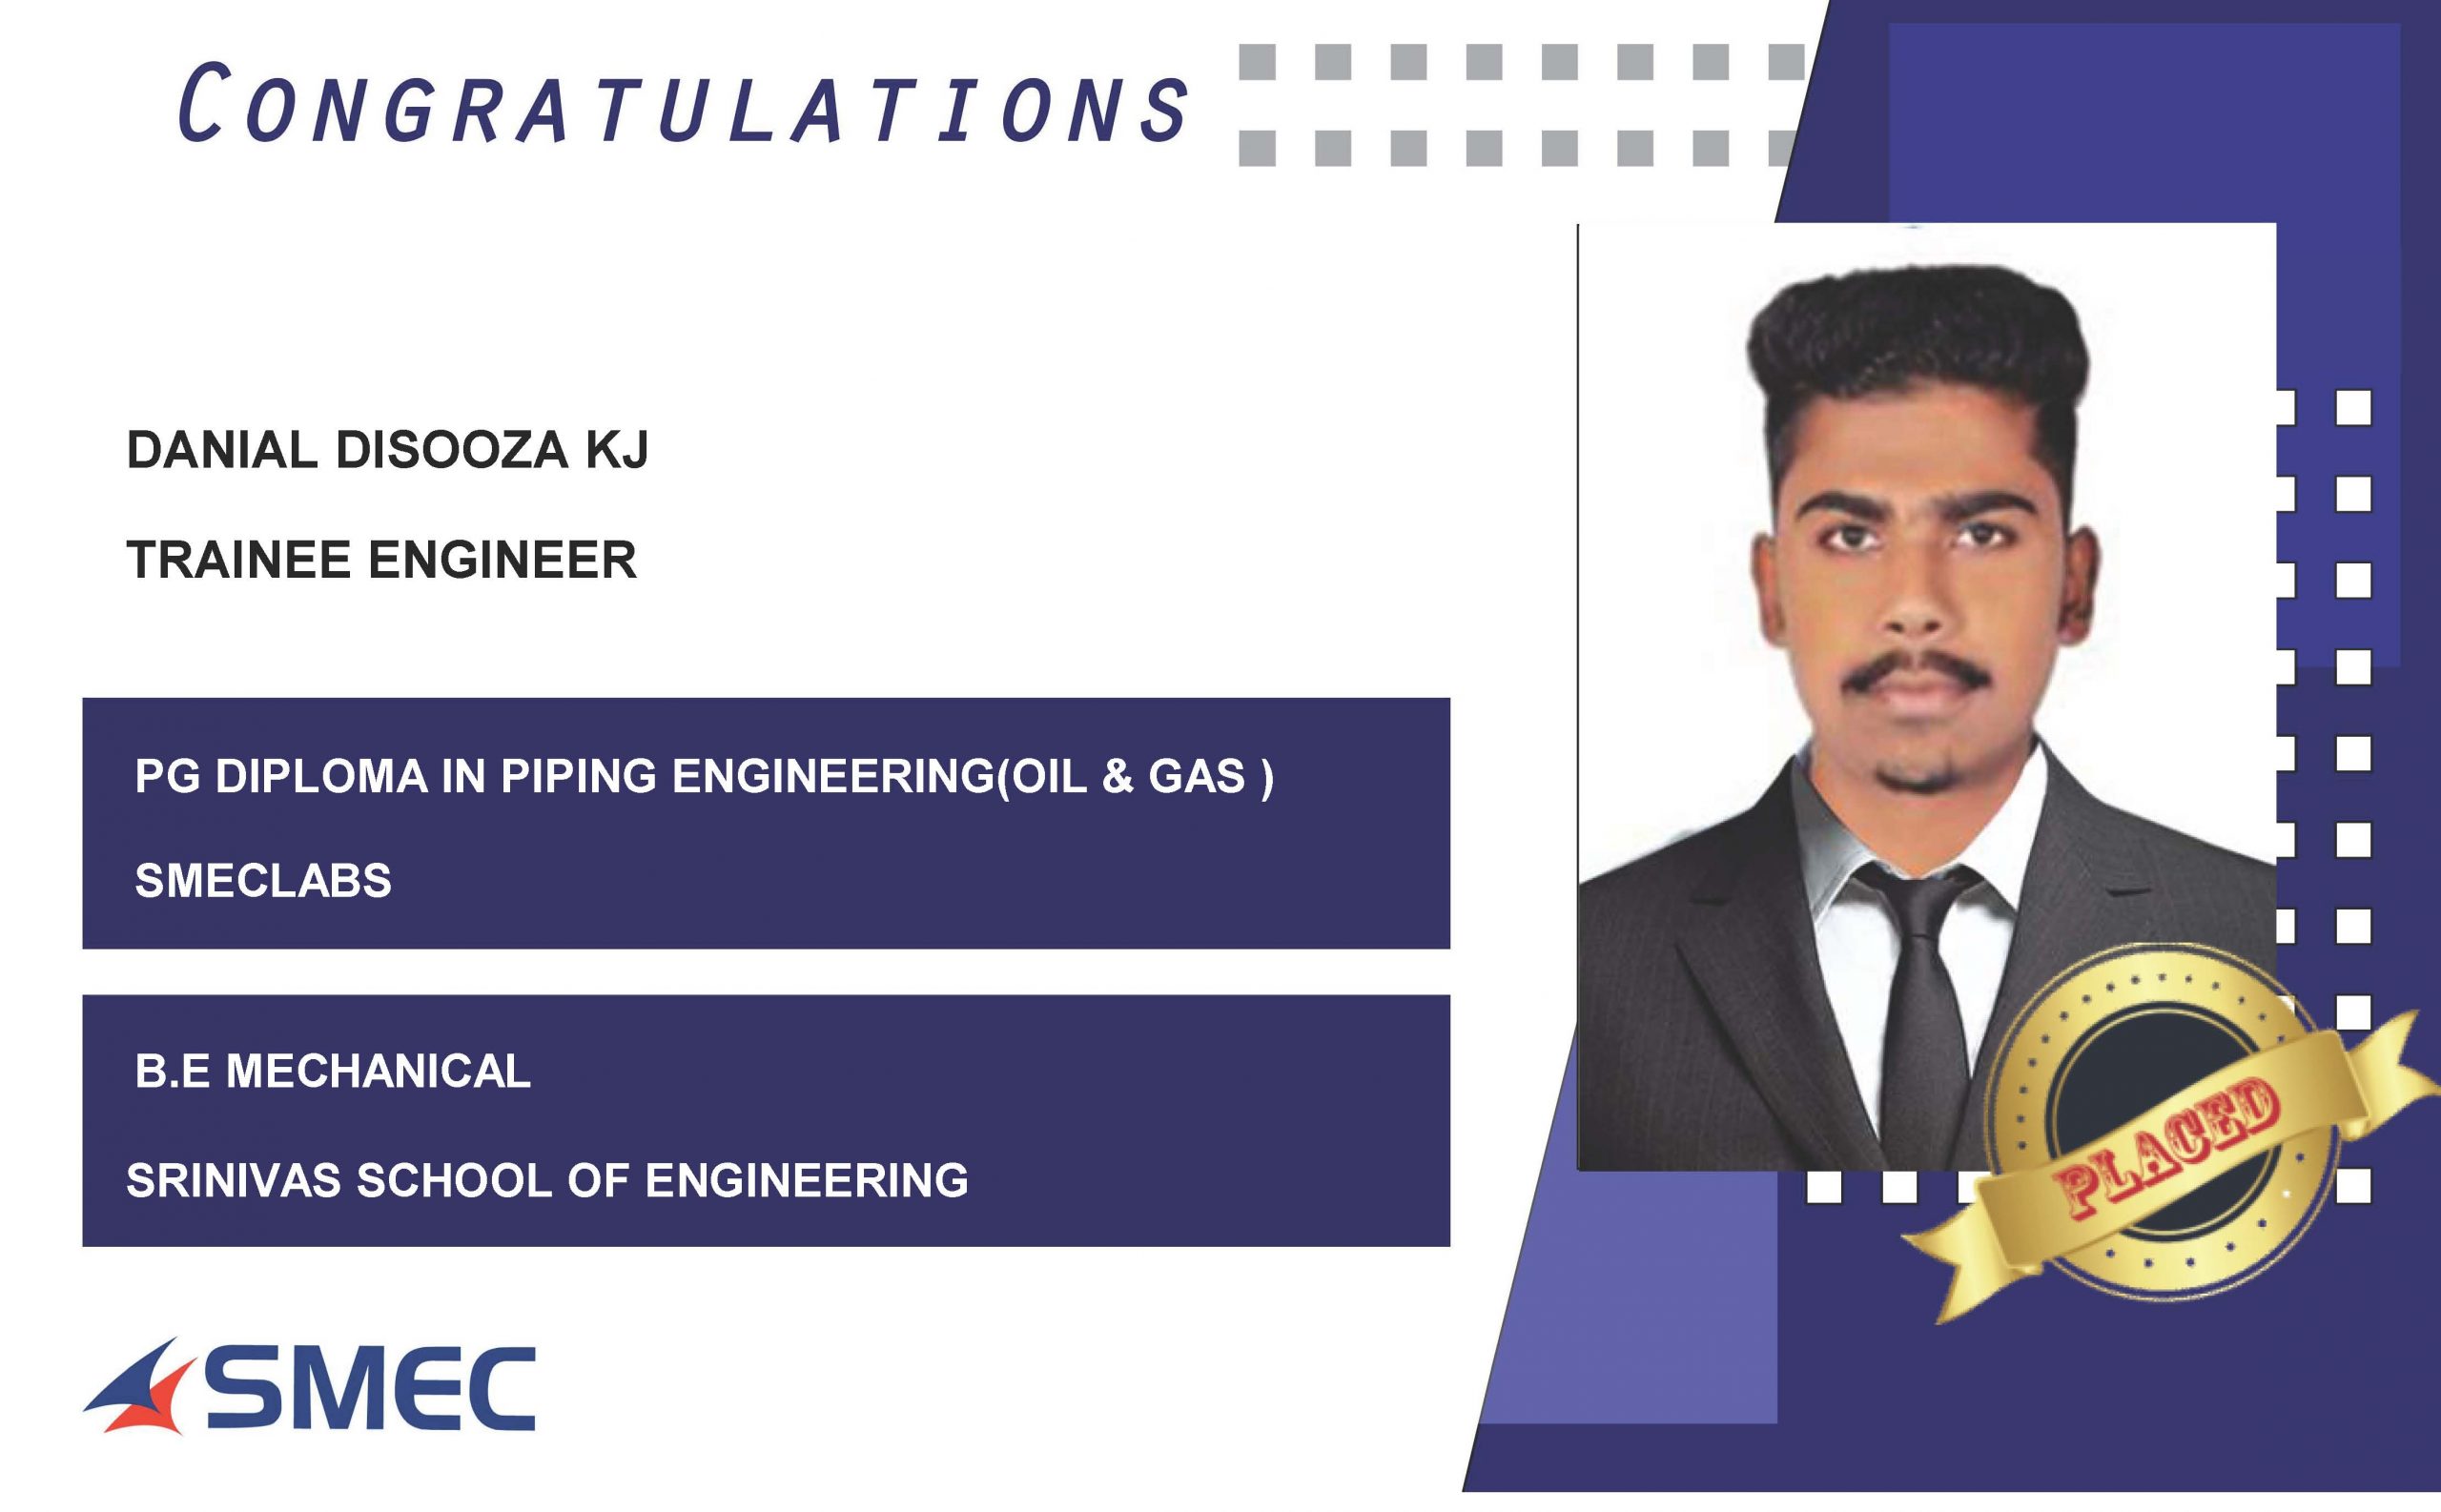 Danial Disooza KJ Placed Successfully as Trainee Engineer